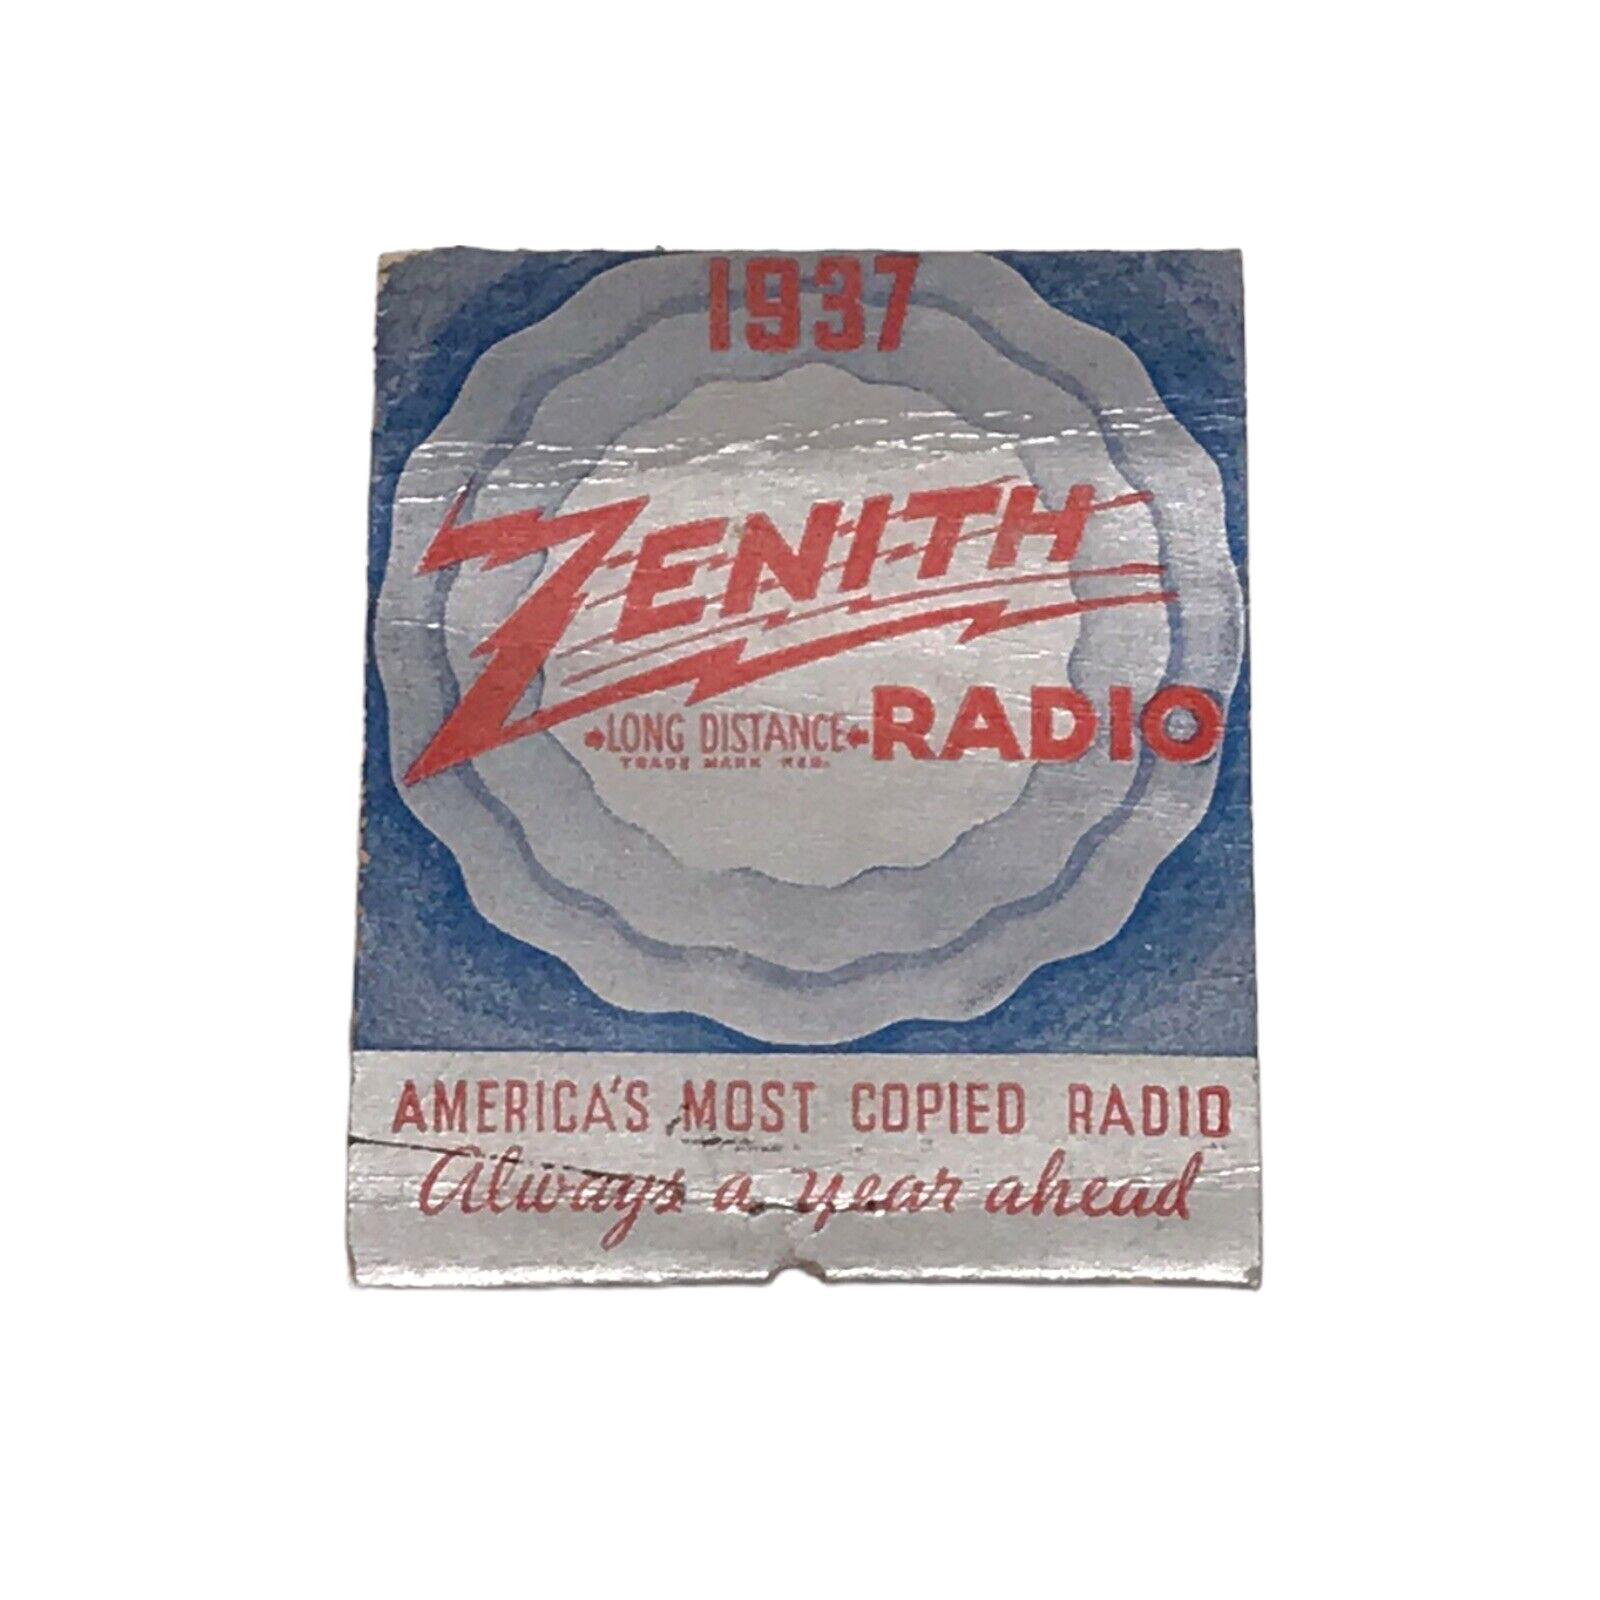 VINTAGE 1937 ZENITH RADIO ADVERTISING OVERSIZED MATCHBOOK DEALER PROMO